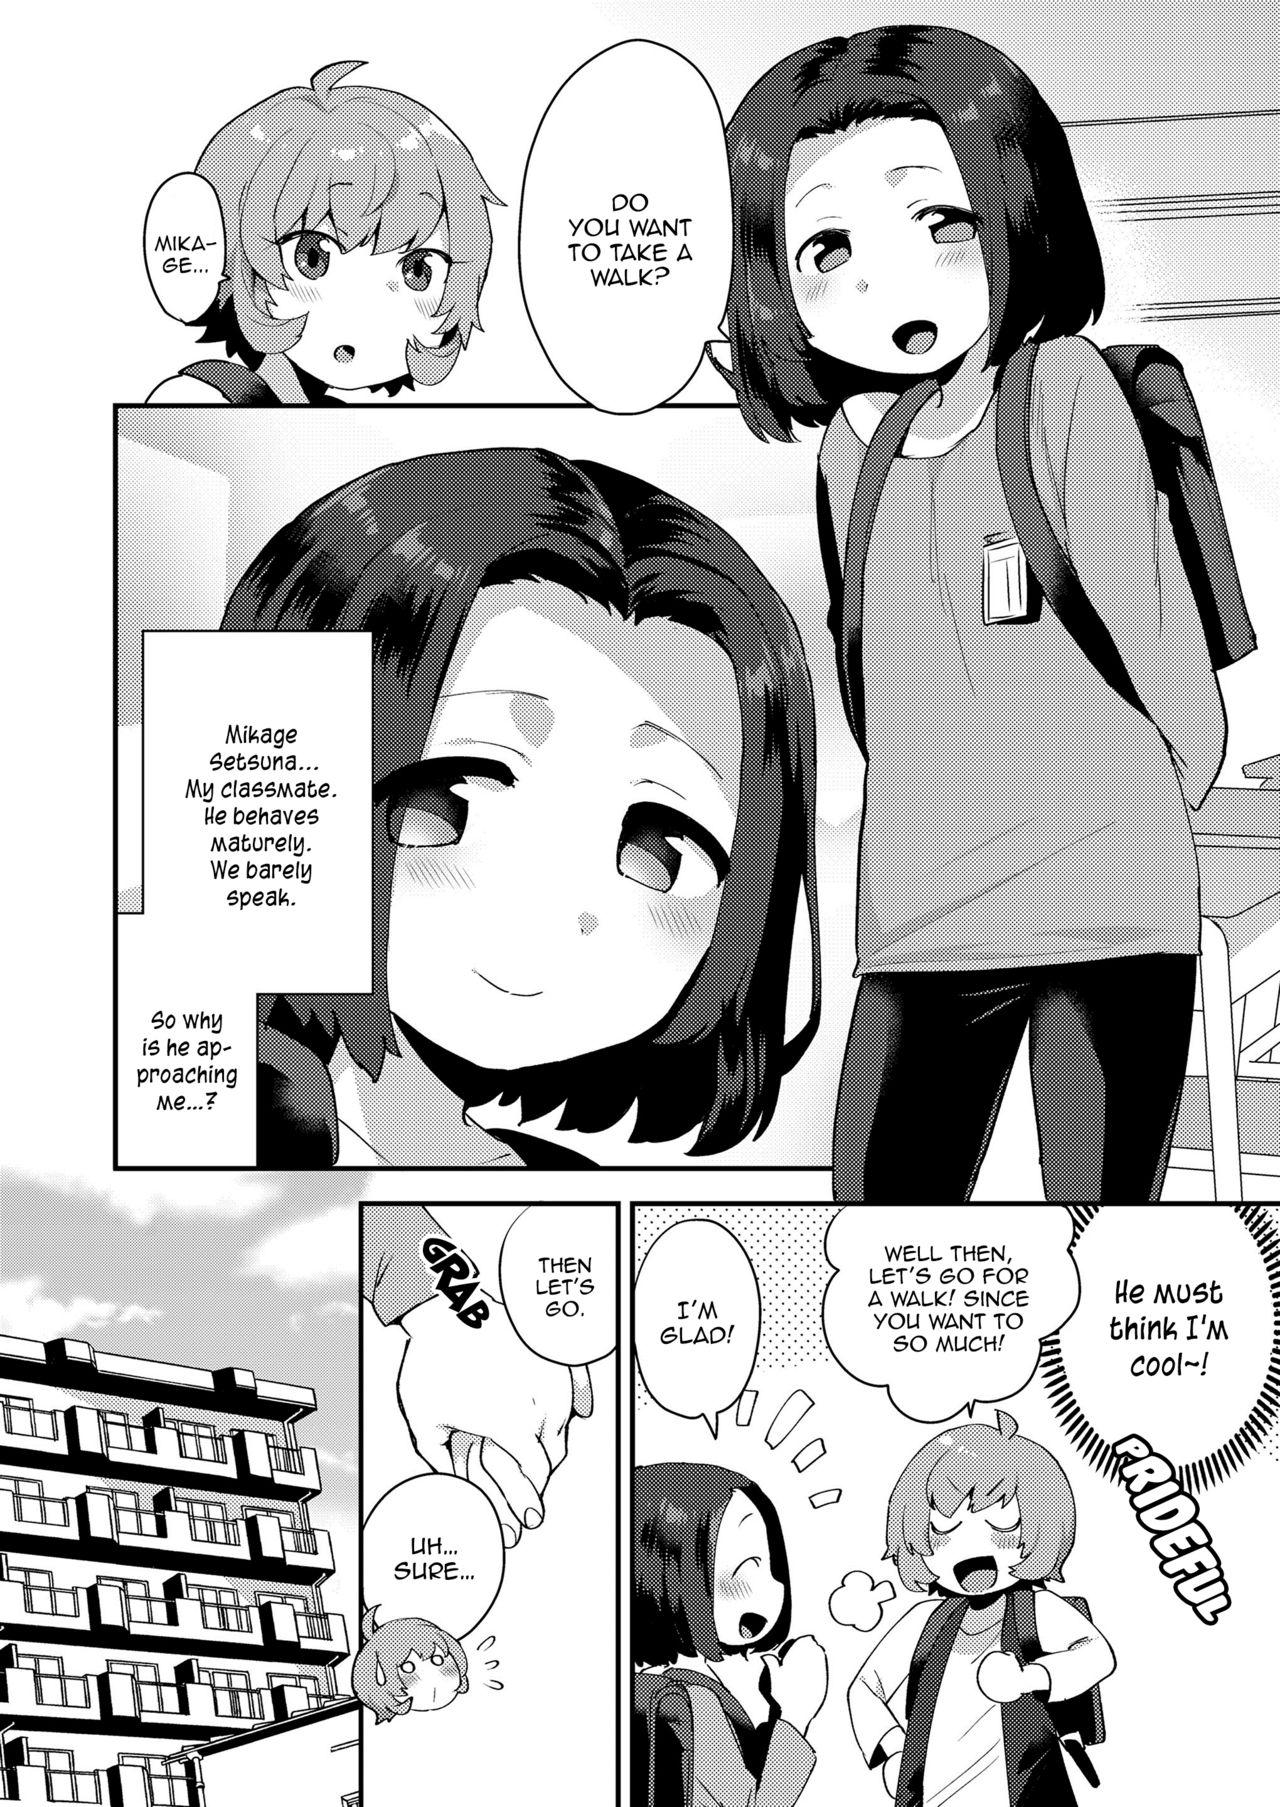 Makotokun’s After School Adventures 2